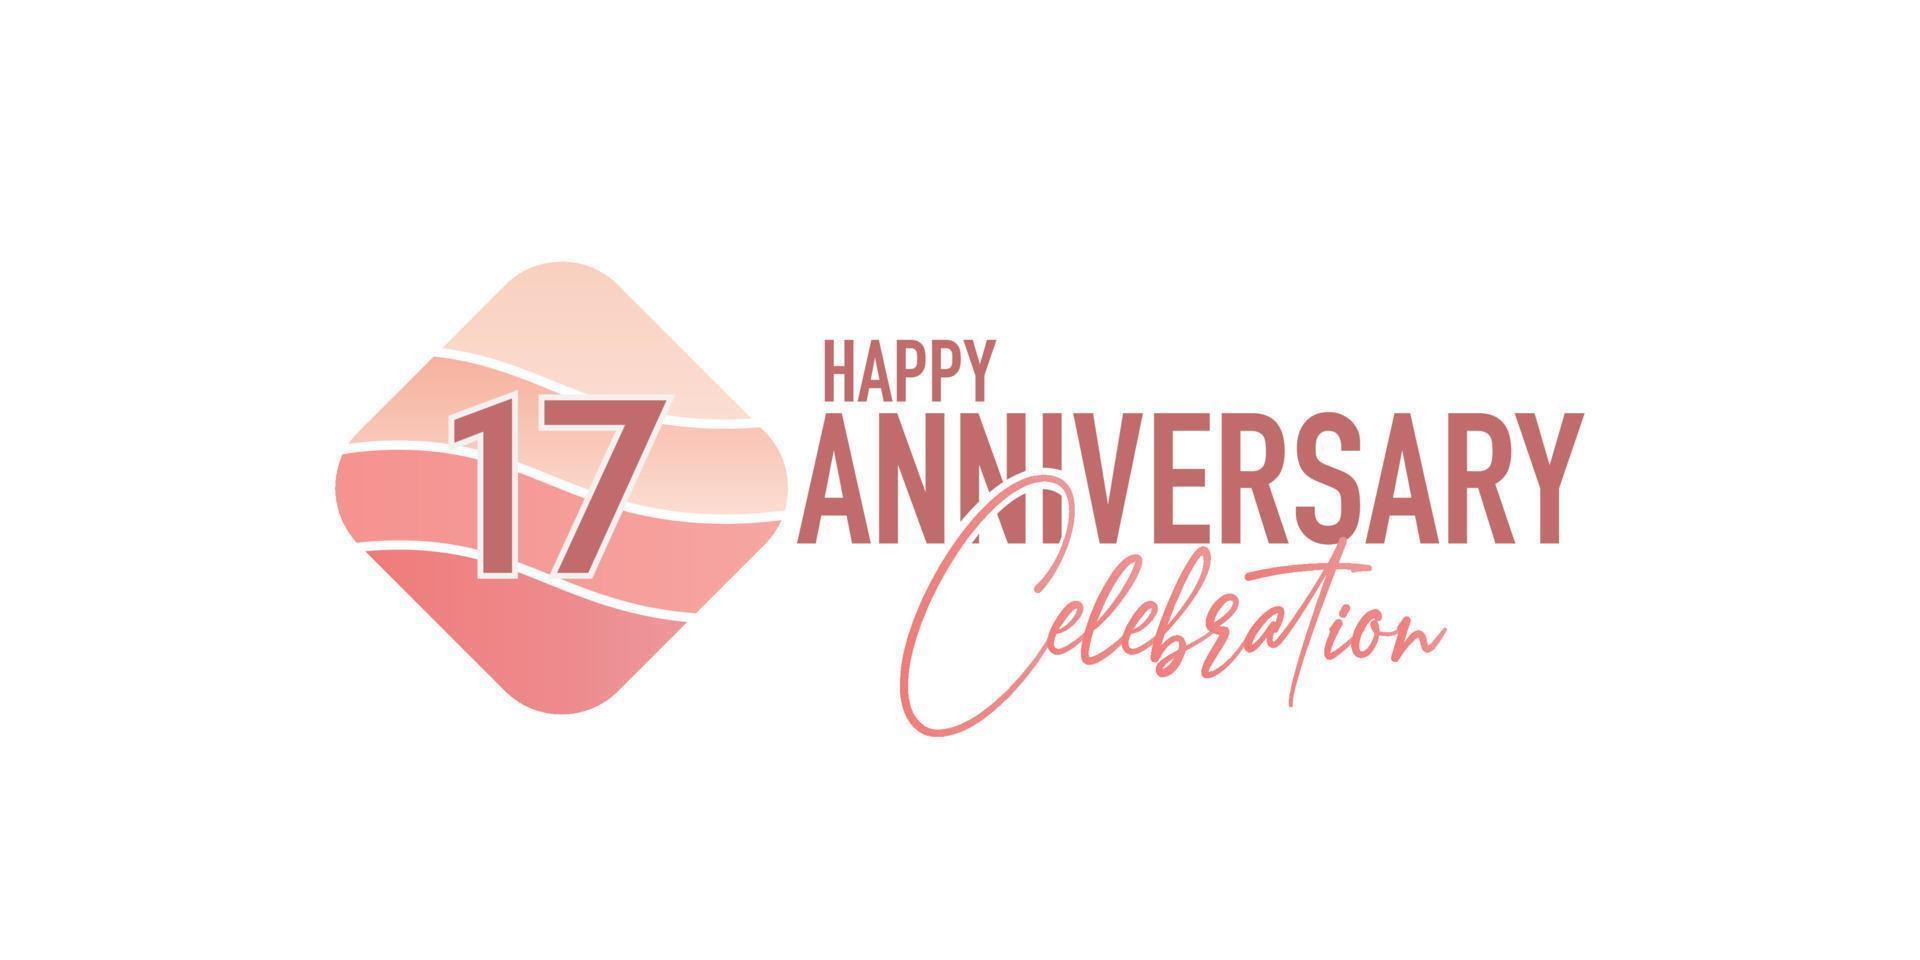 17 years anniversary logo vector illustration design celebration with pink geometric design